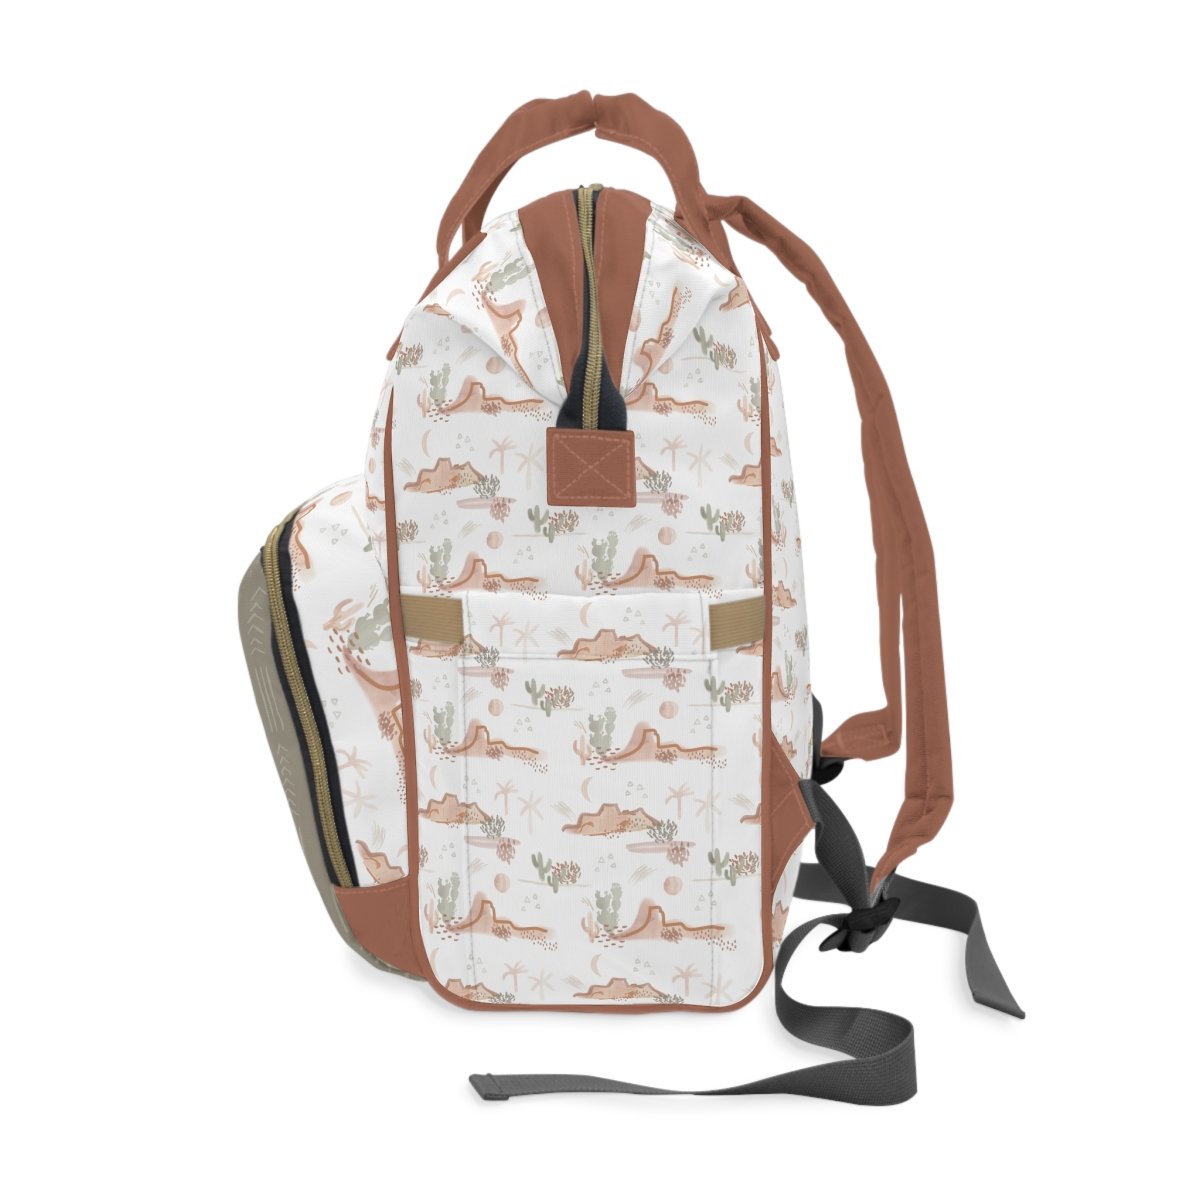 Boho Desert Personalized Backpack Diaper Bag - Backpack